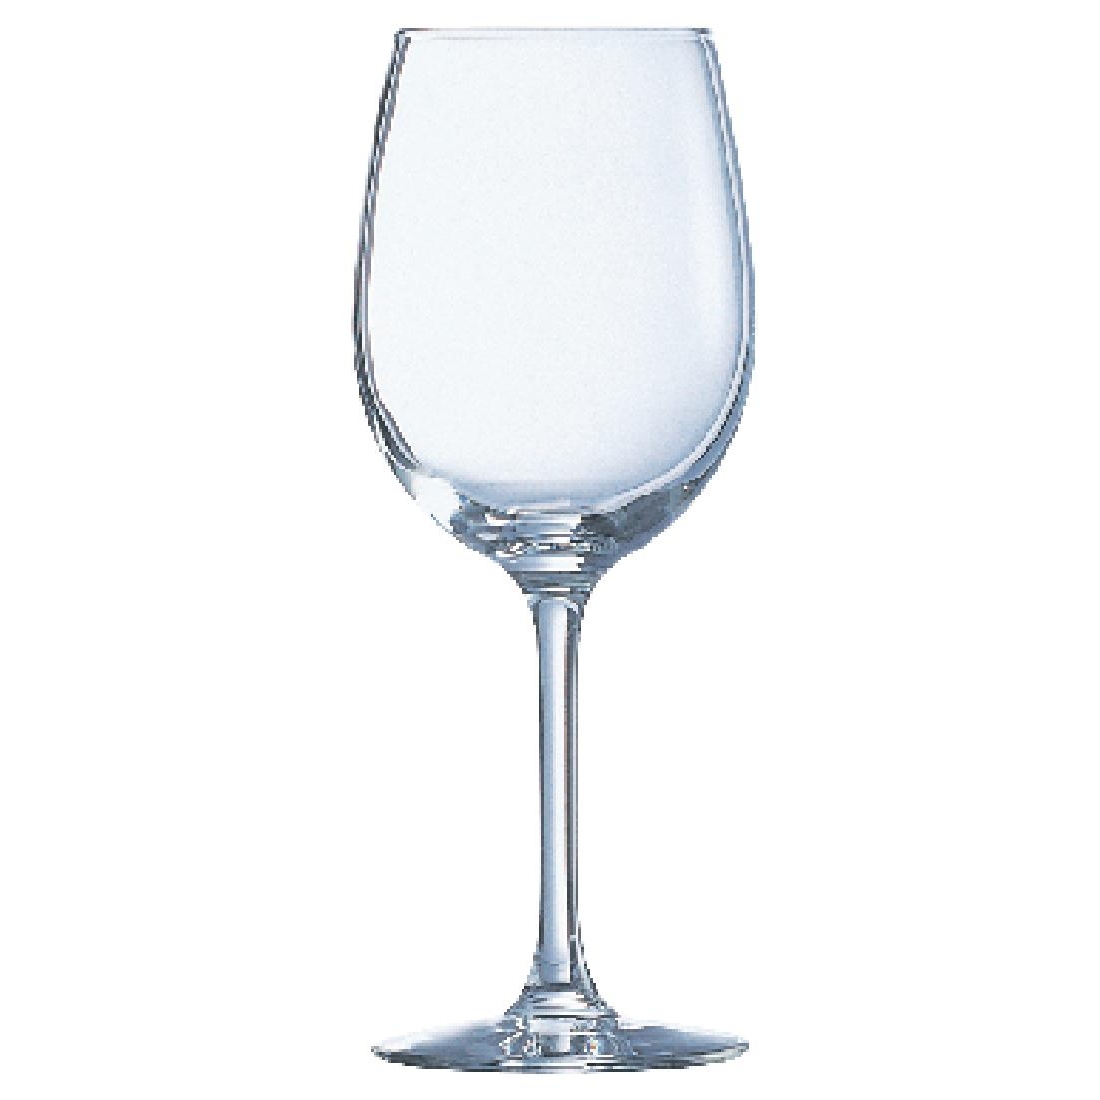 Chef & Sommelier Cabernet Tulip Wine Glasses 250ml